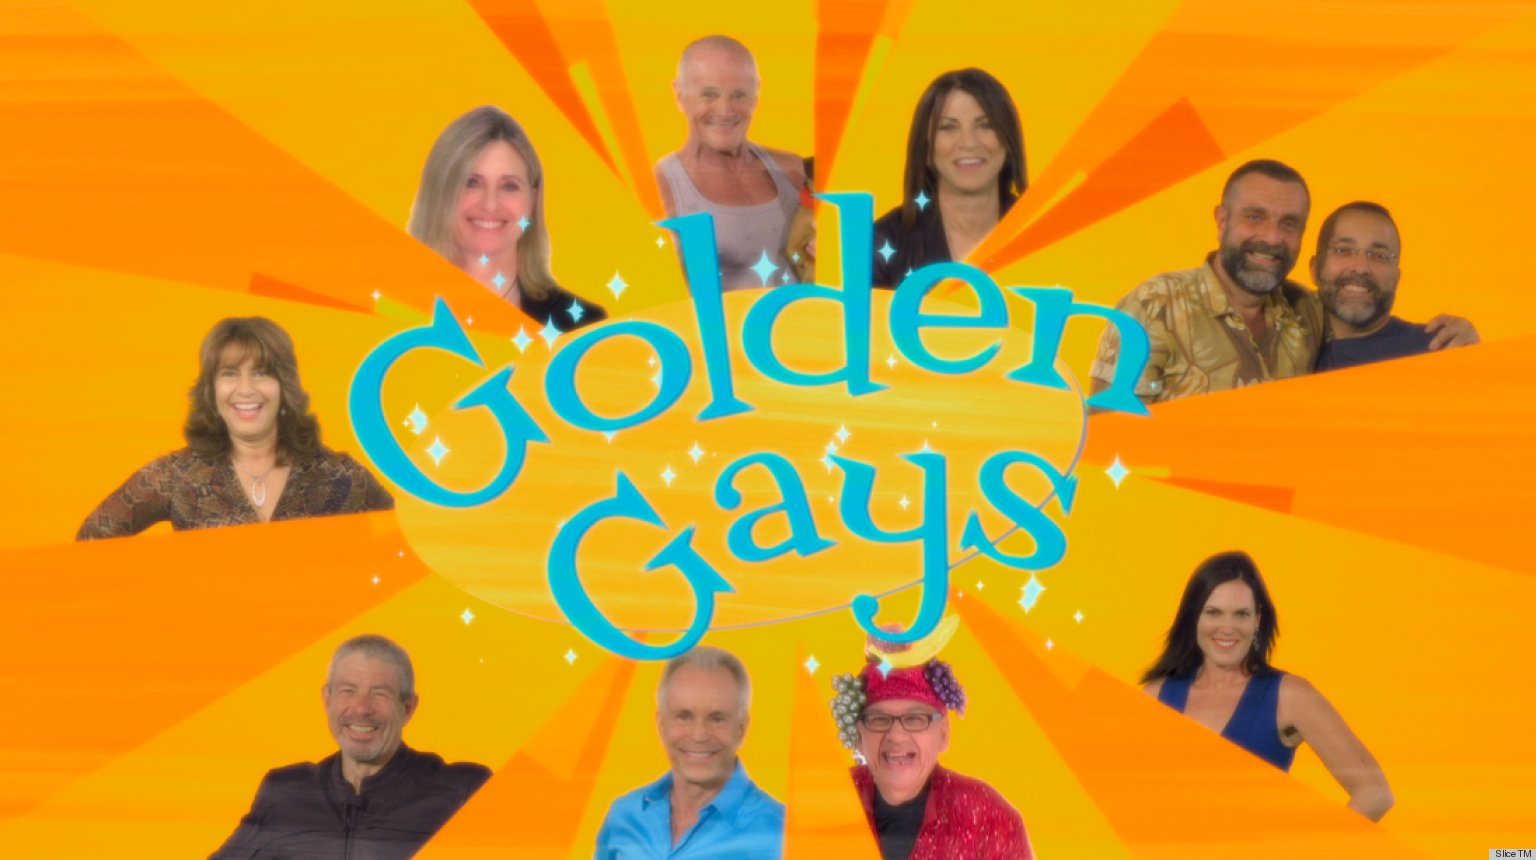 Golden Gays